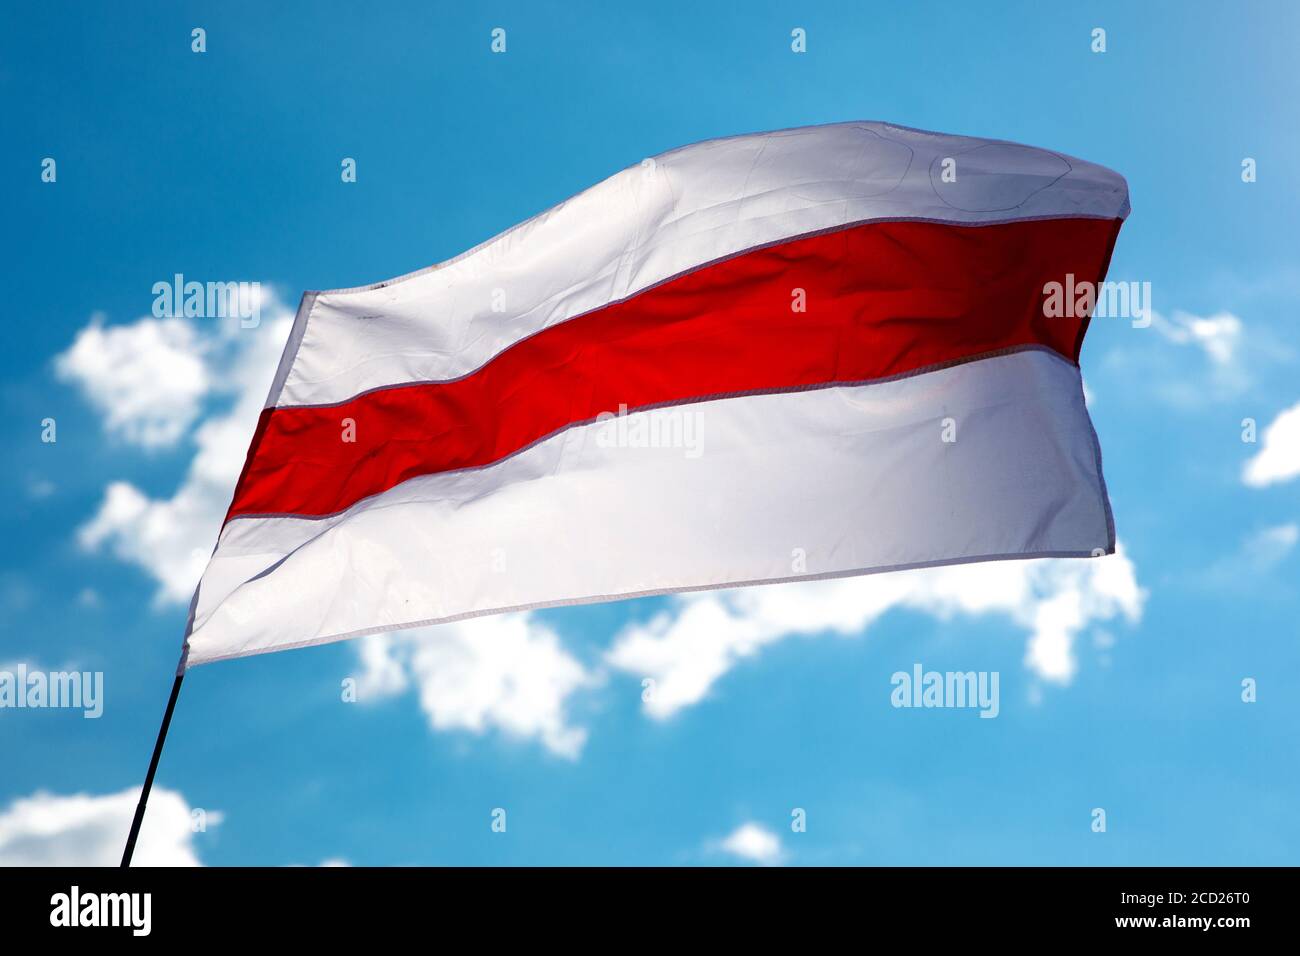 Фото флага бело красно белый. Флаг Беларуси бело-красно-белый. Беларусь бело красно белый. Бело сине красный флаг Беларуси. Флаг Белоруссии бело красно белый.